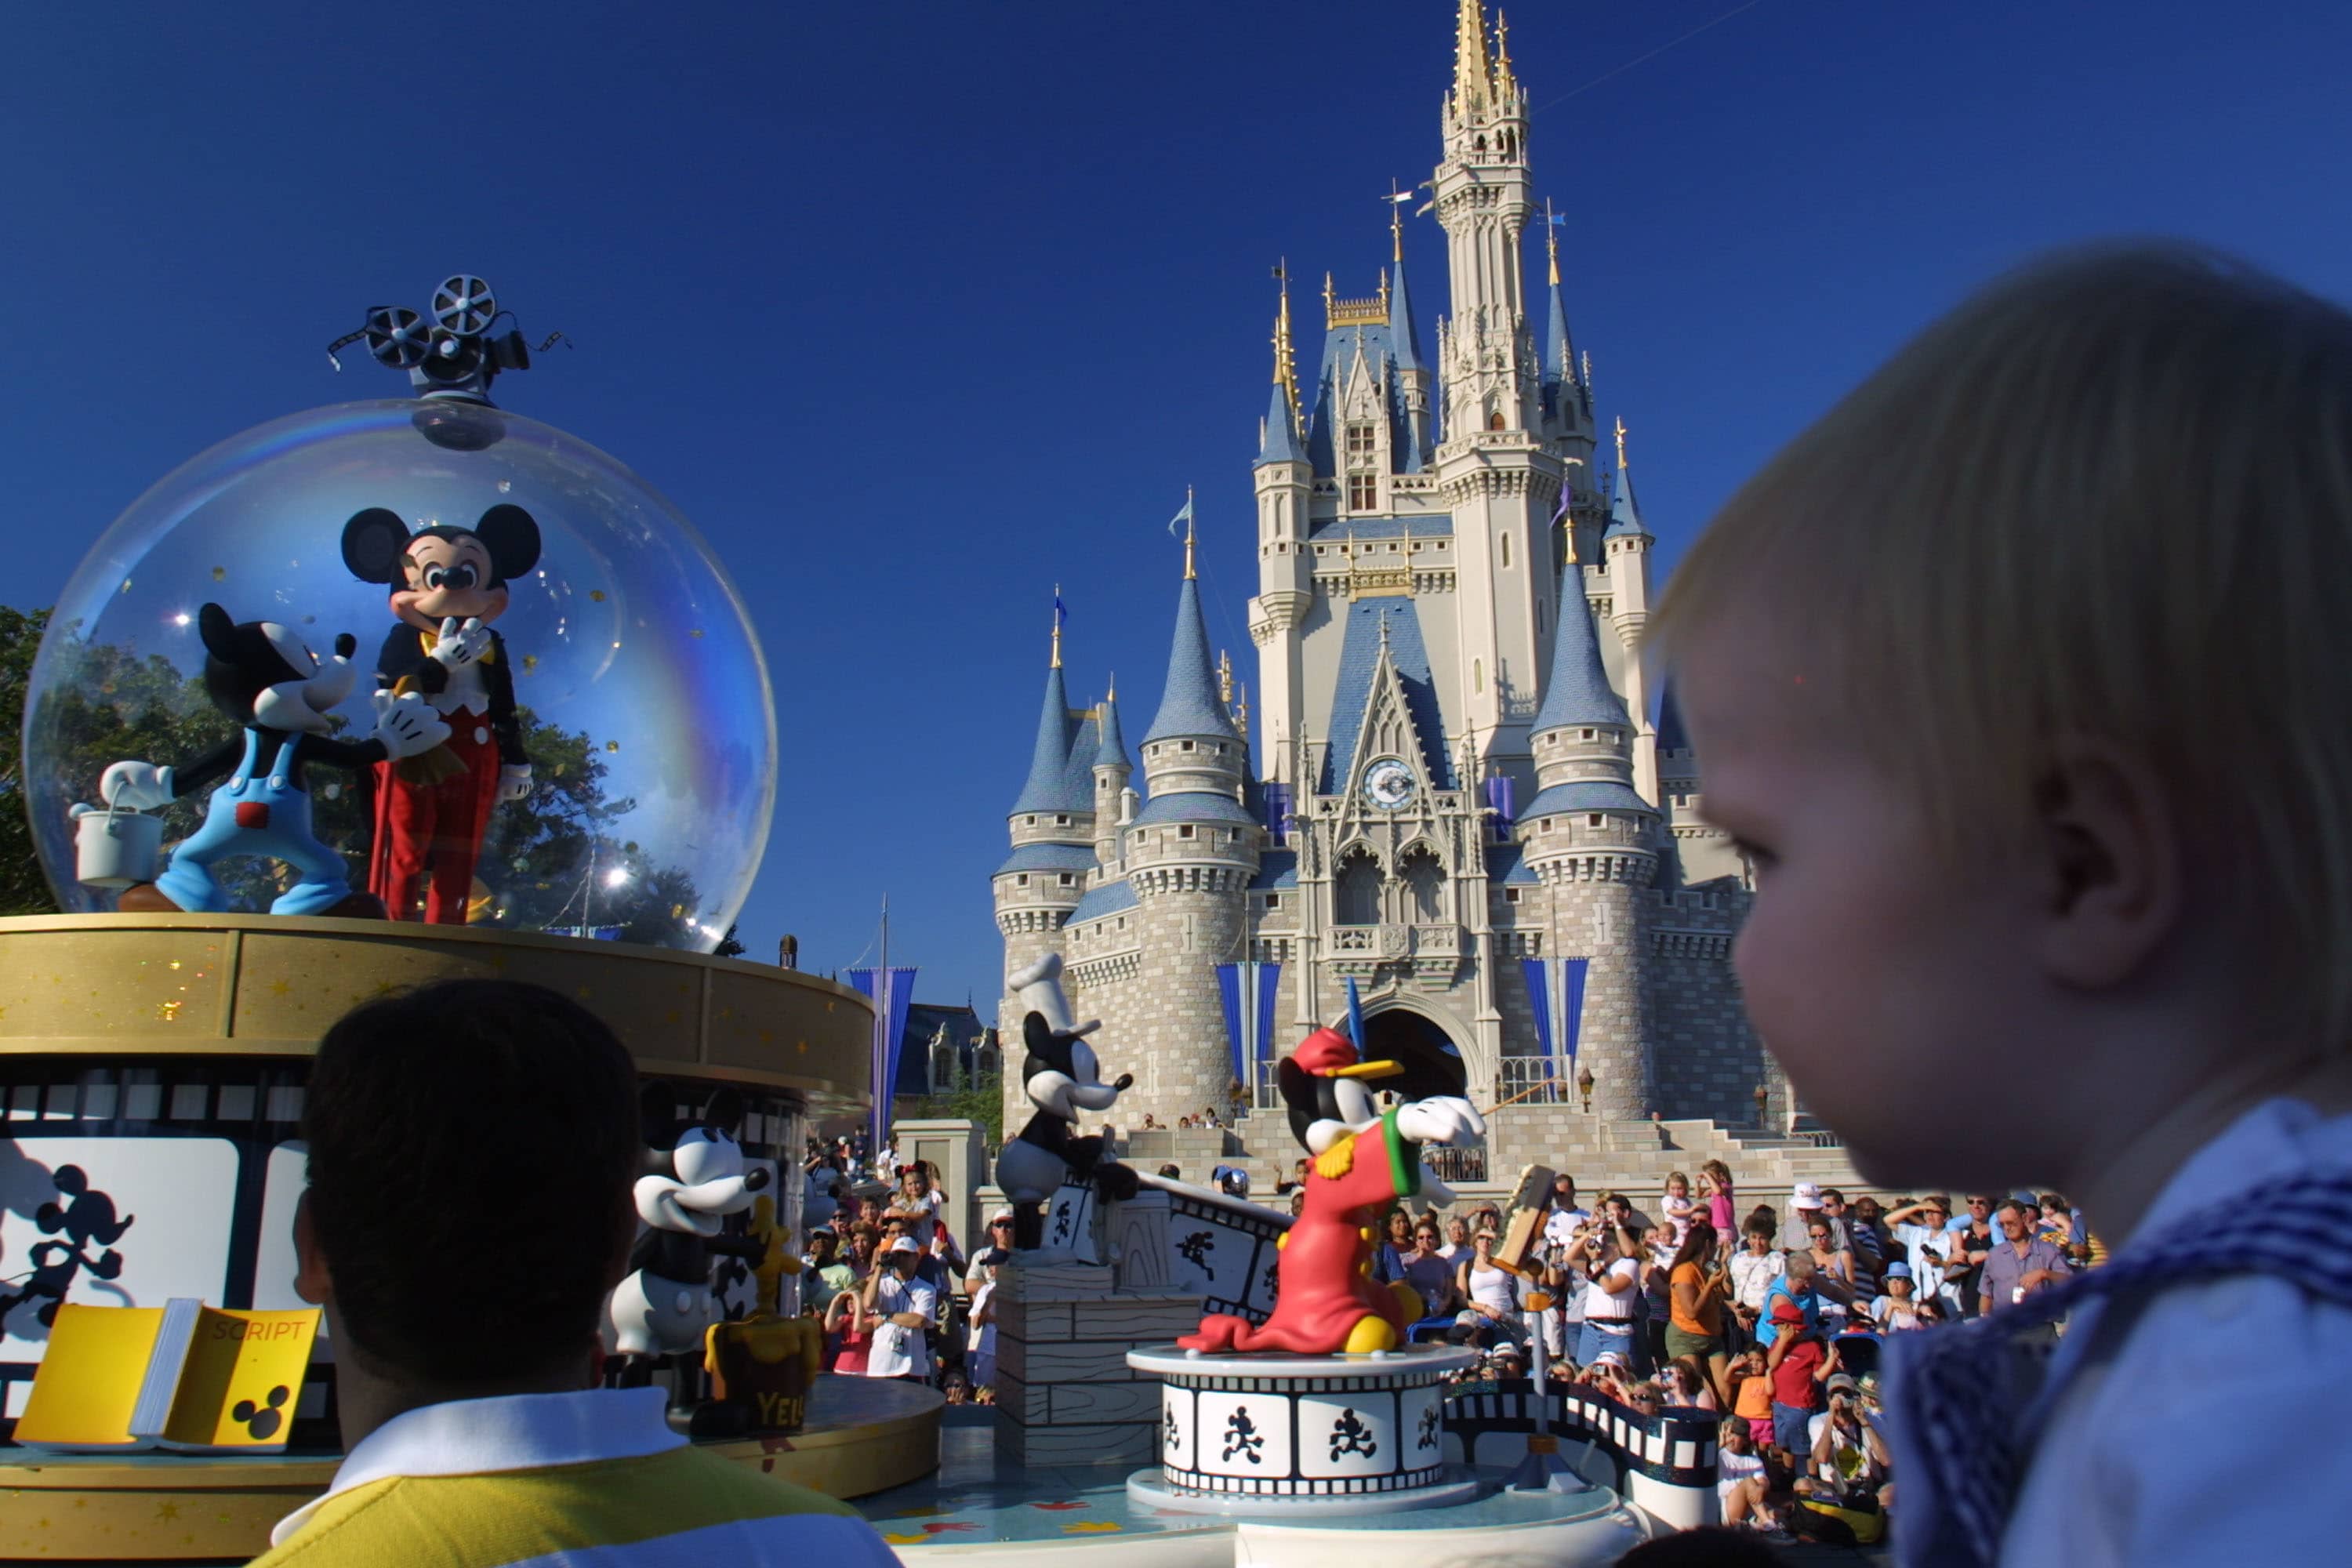 Bob Iger's return: Disney's CEO takes action that should please investors